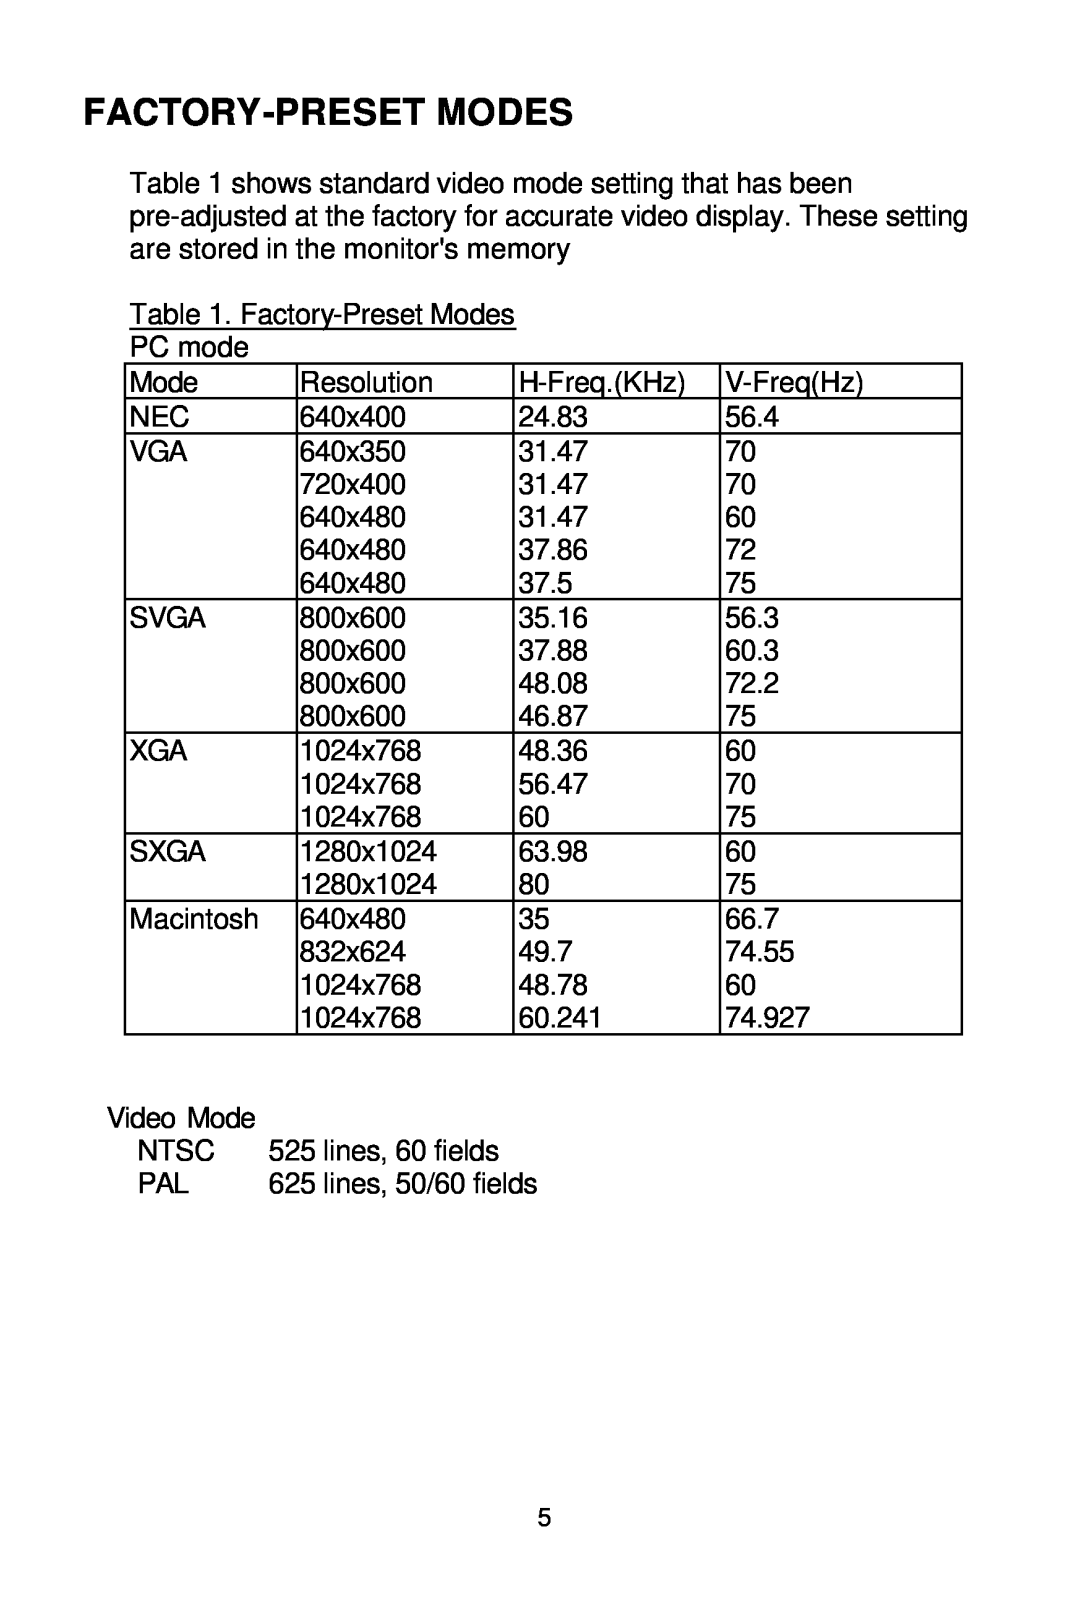 Tote Vision LCD-1700VRZ manual Factory-Preset Modes 